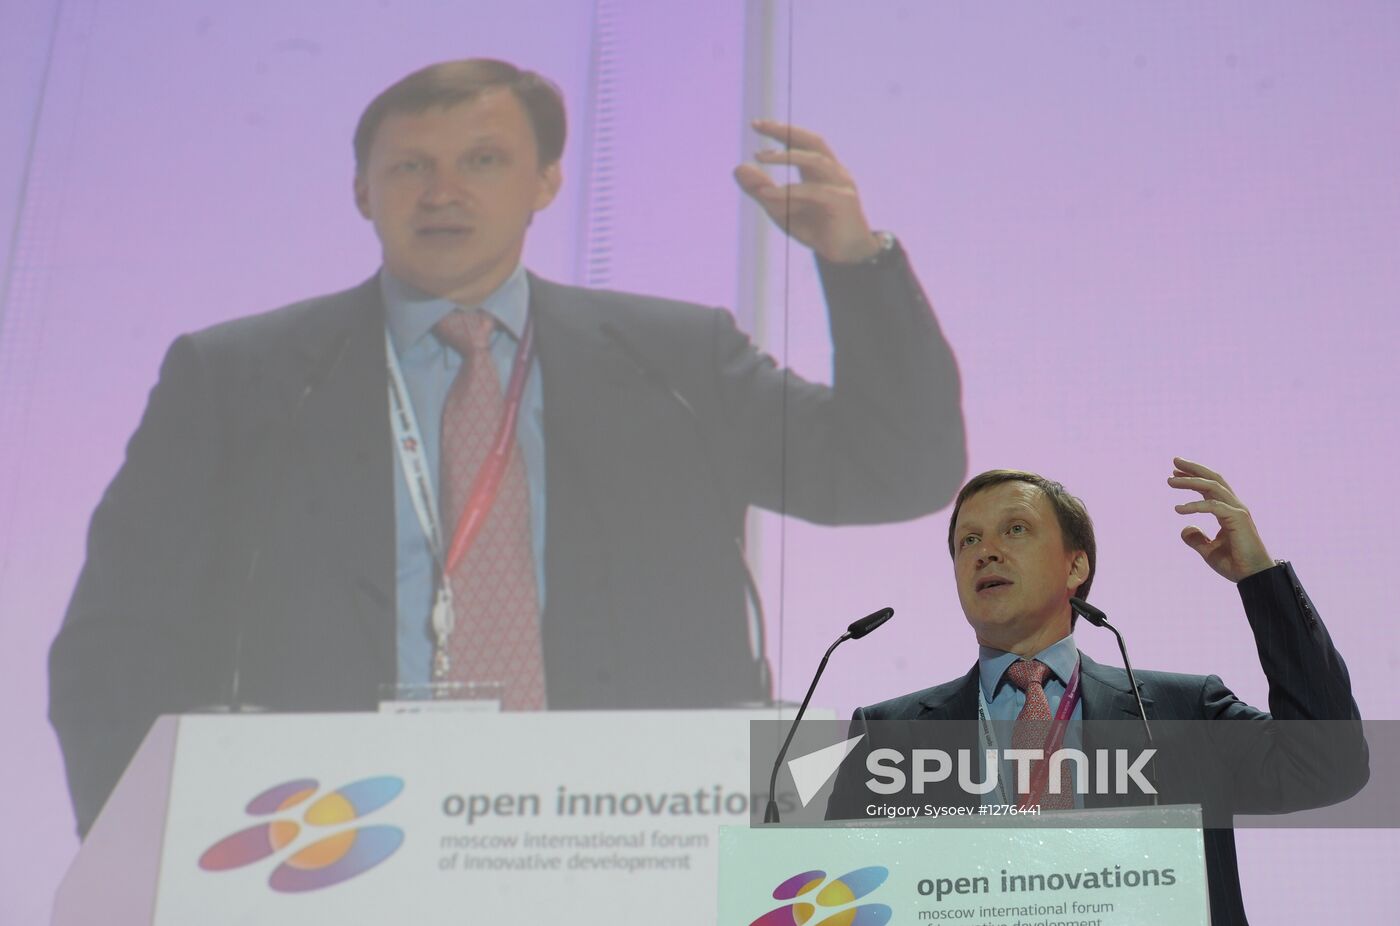 Moscow International Forum "Open Innovations"